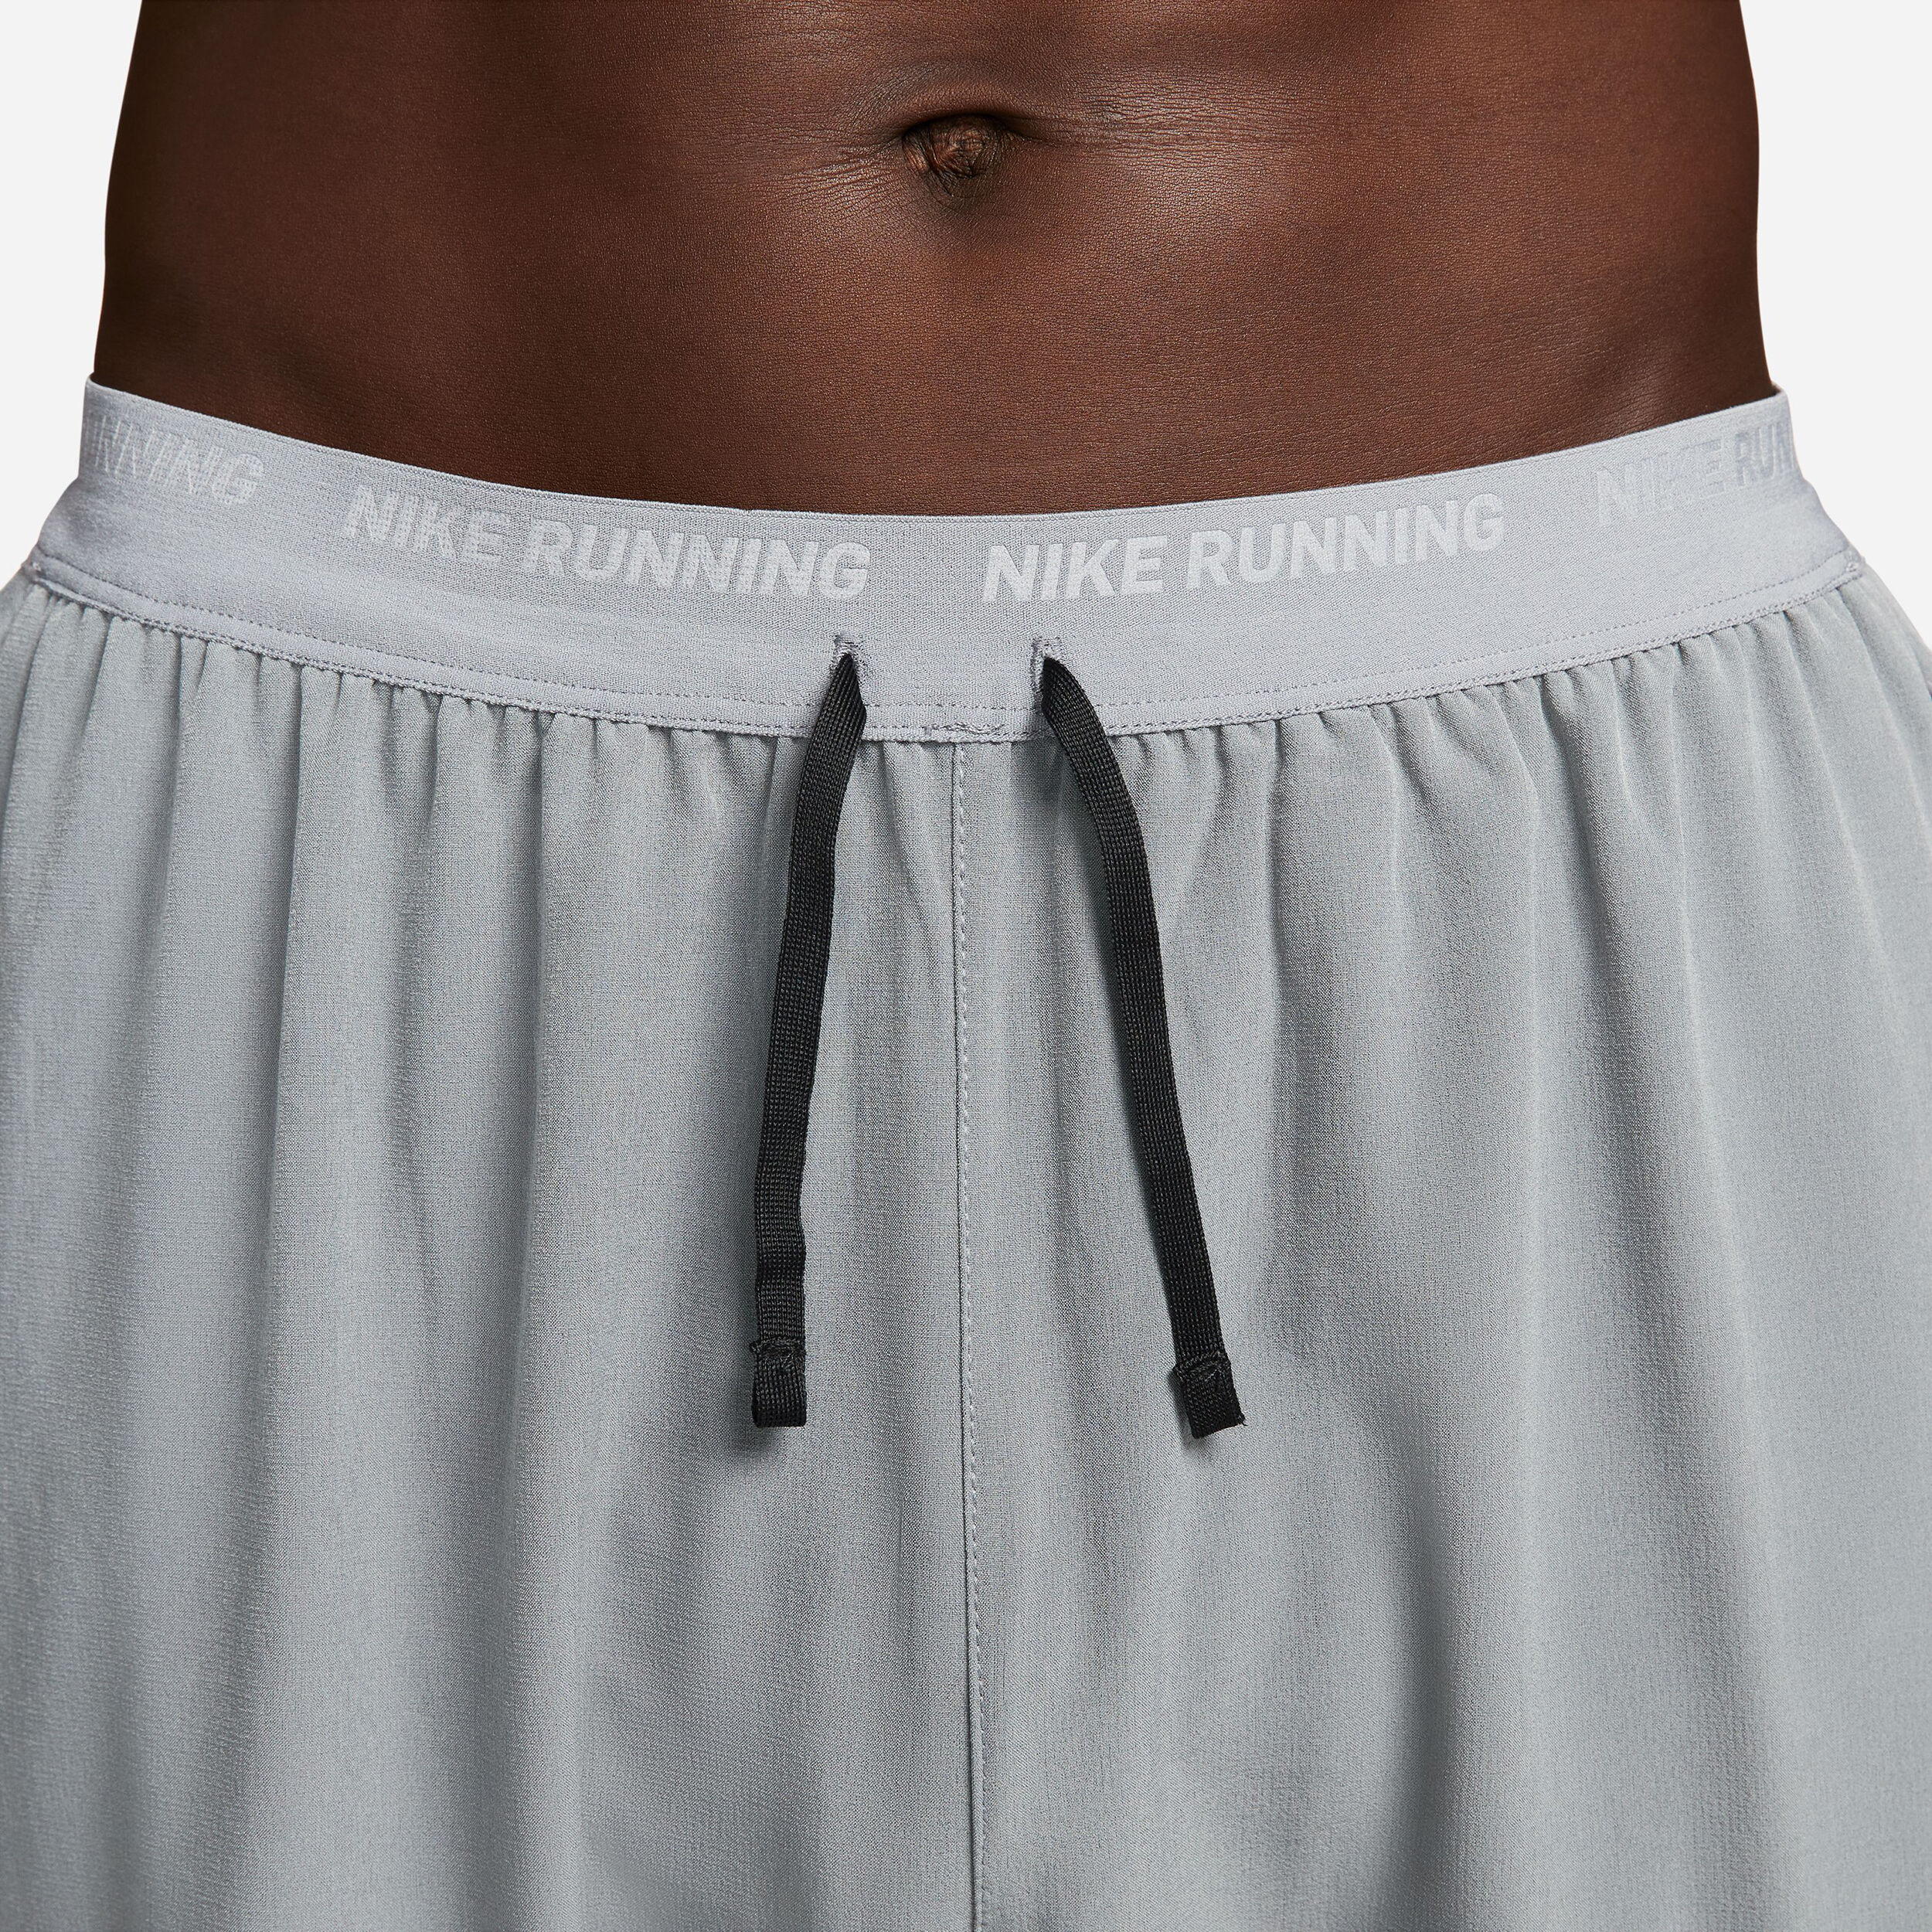 buy Nike DriFit Phenom Elite Woven Running Pants Men  Grey online   Running Point